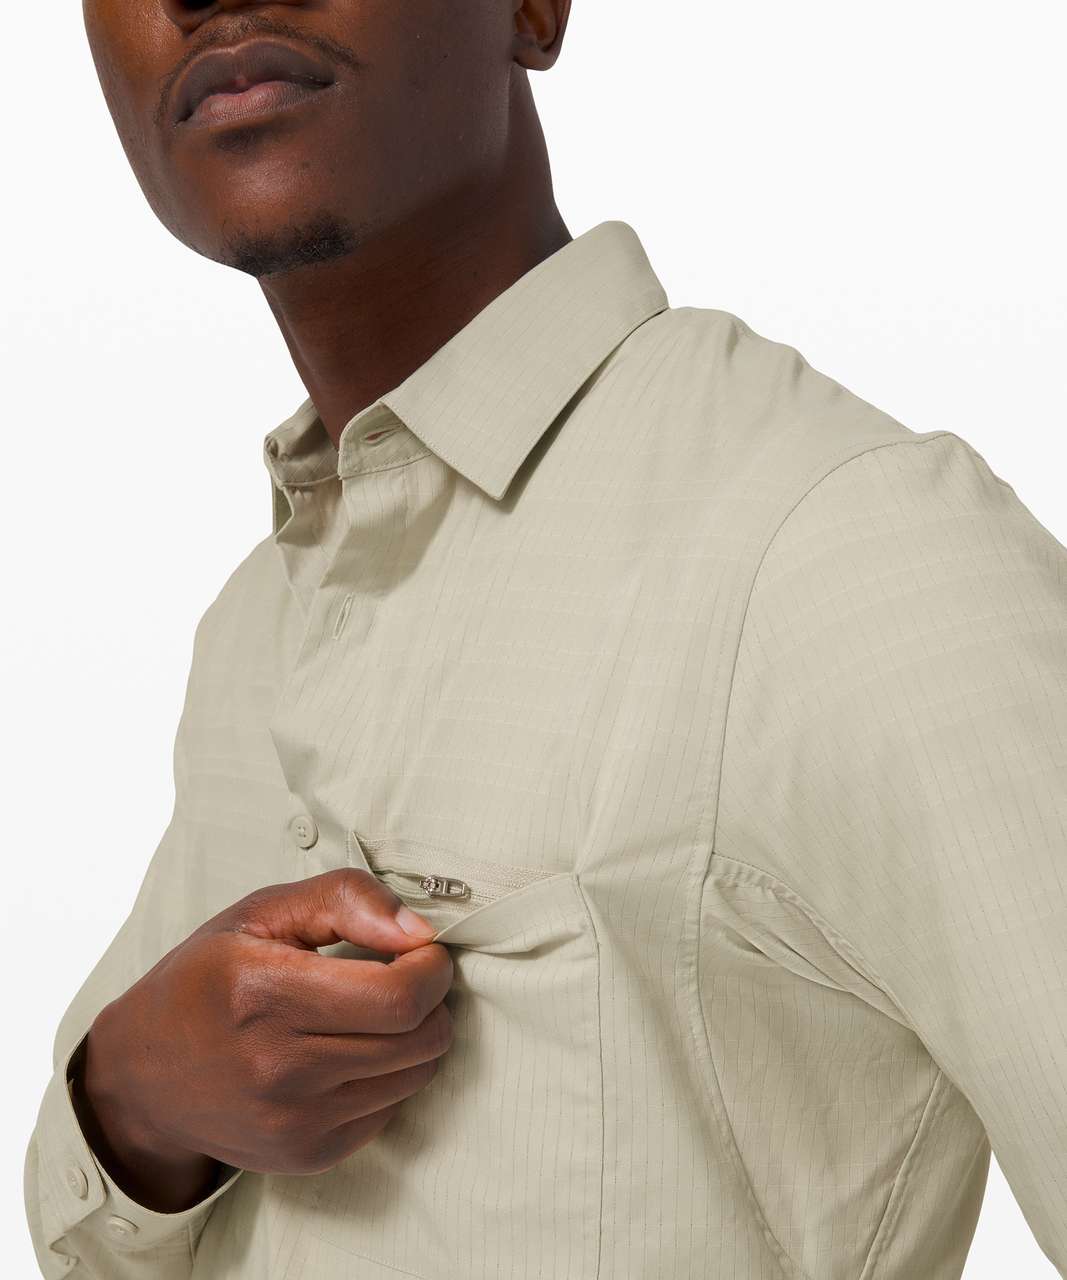 Sage Green Top - Button-Up Top - Long Sleeve Top - Top - Lulus